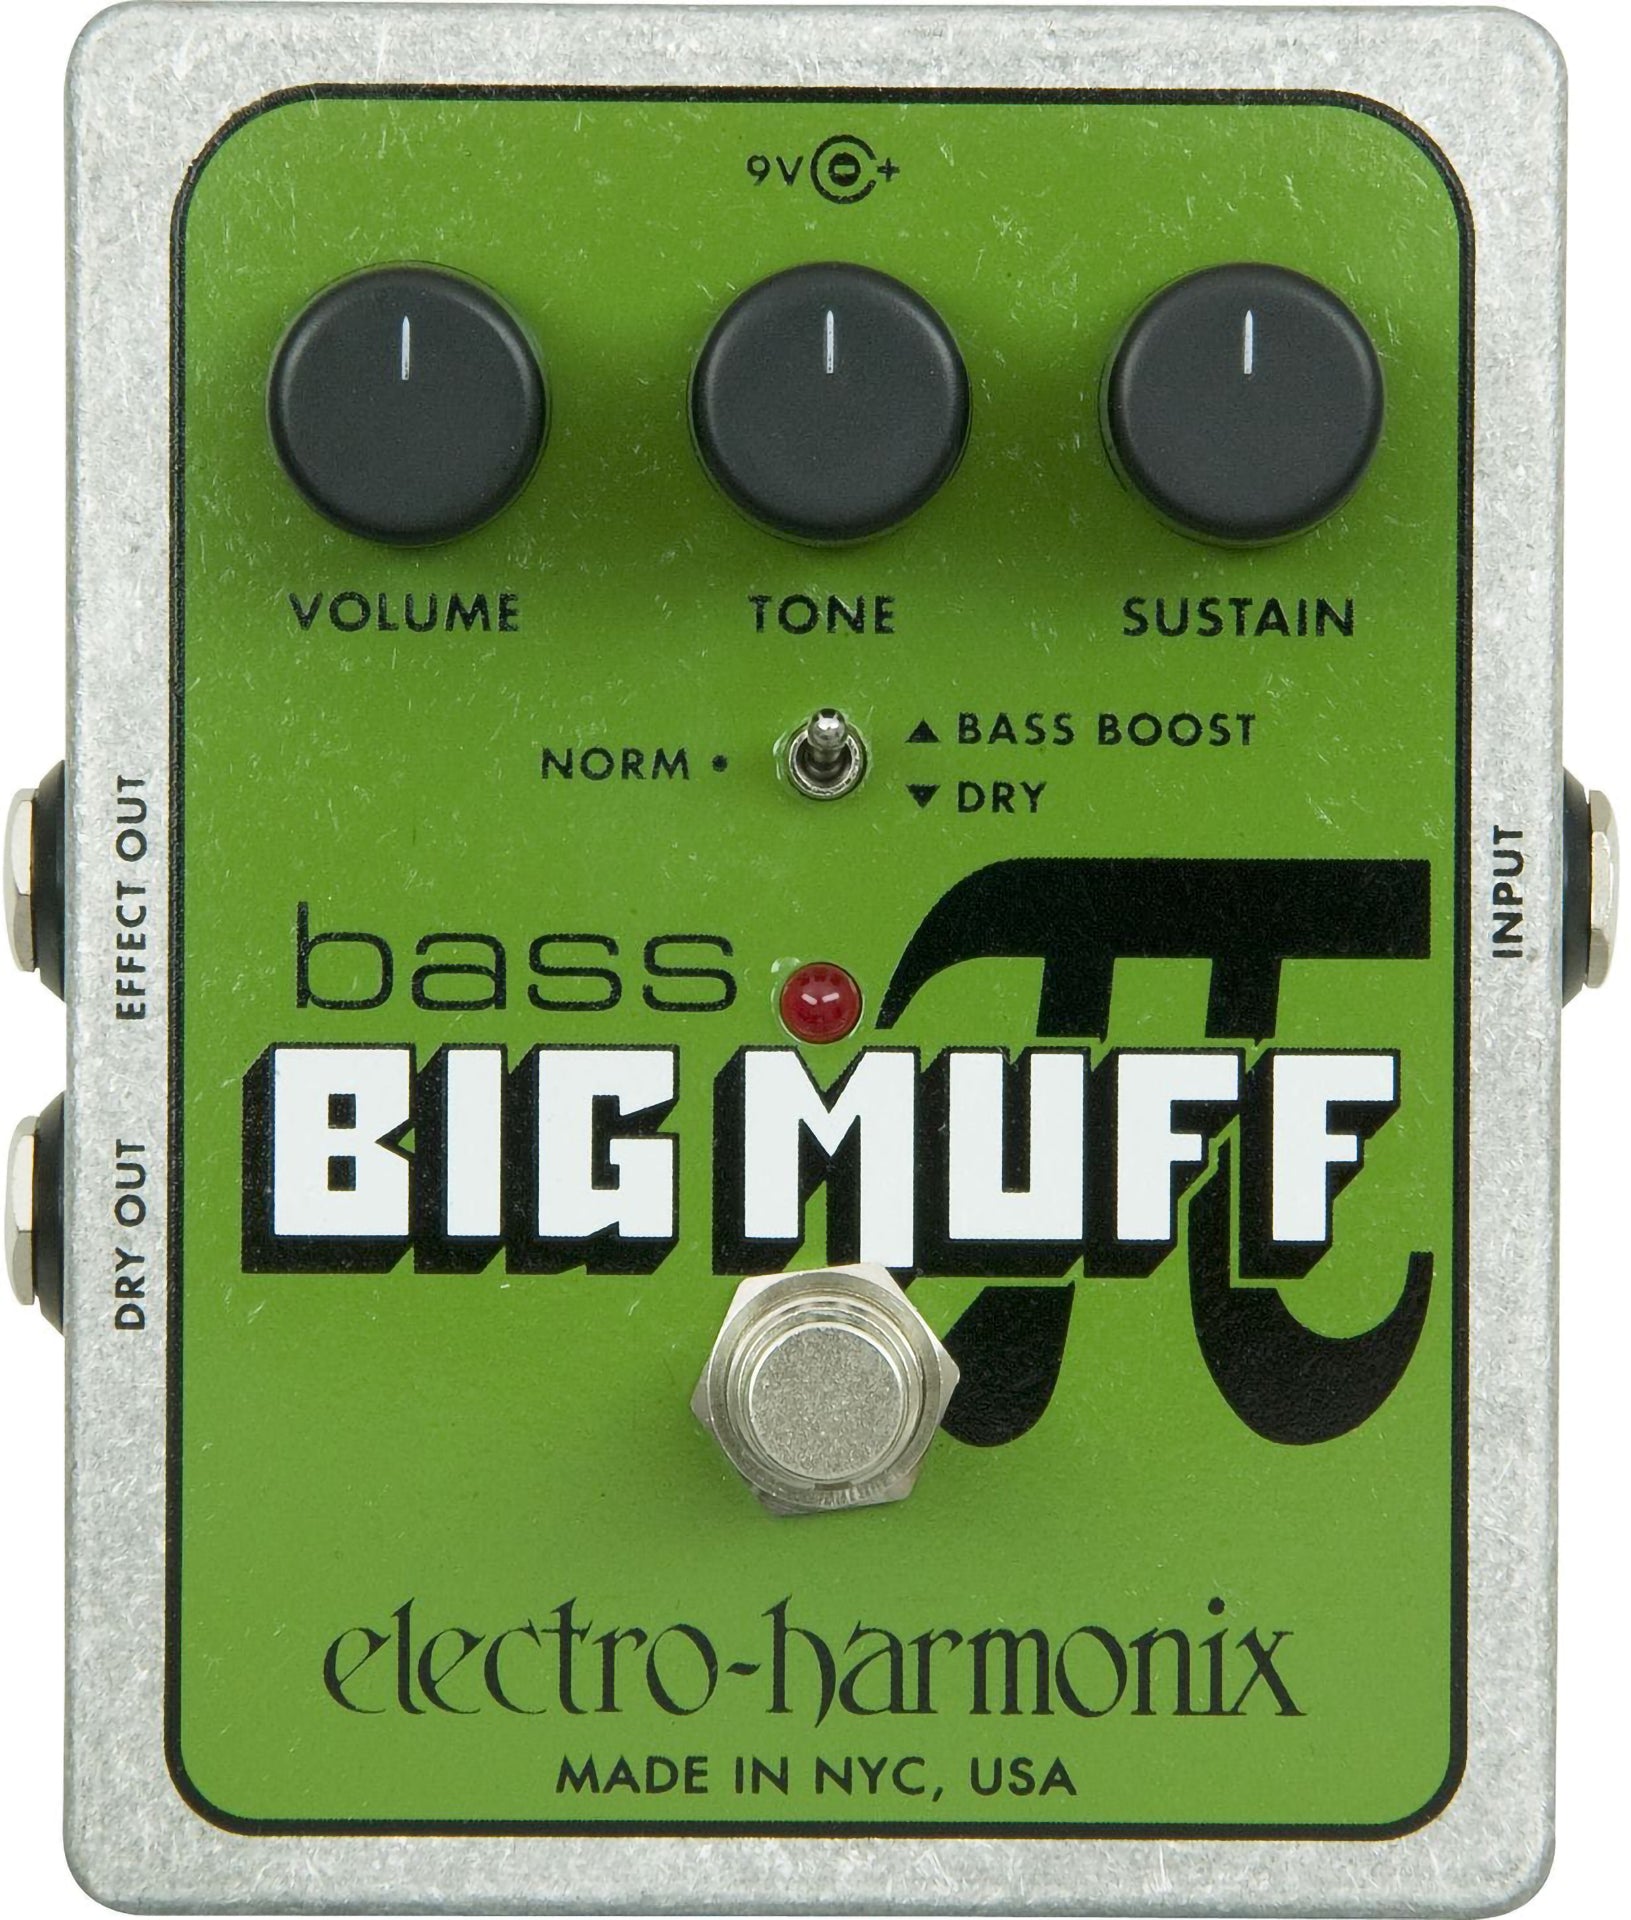 Electro Harmonix Bass Big Muff Distortion Pedal